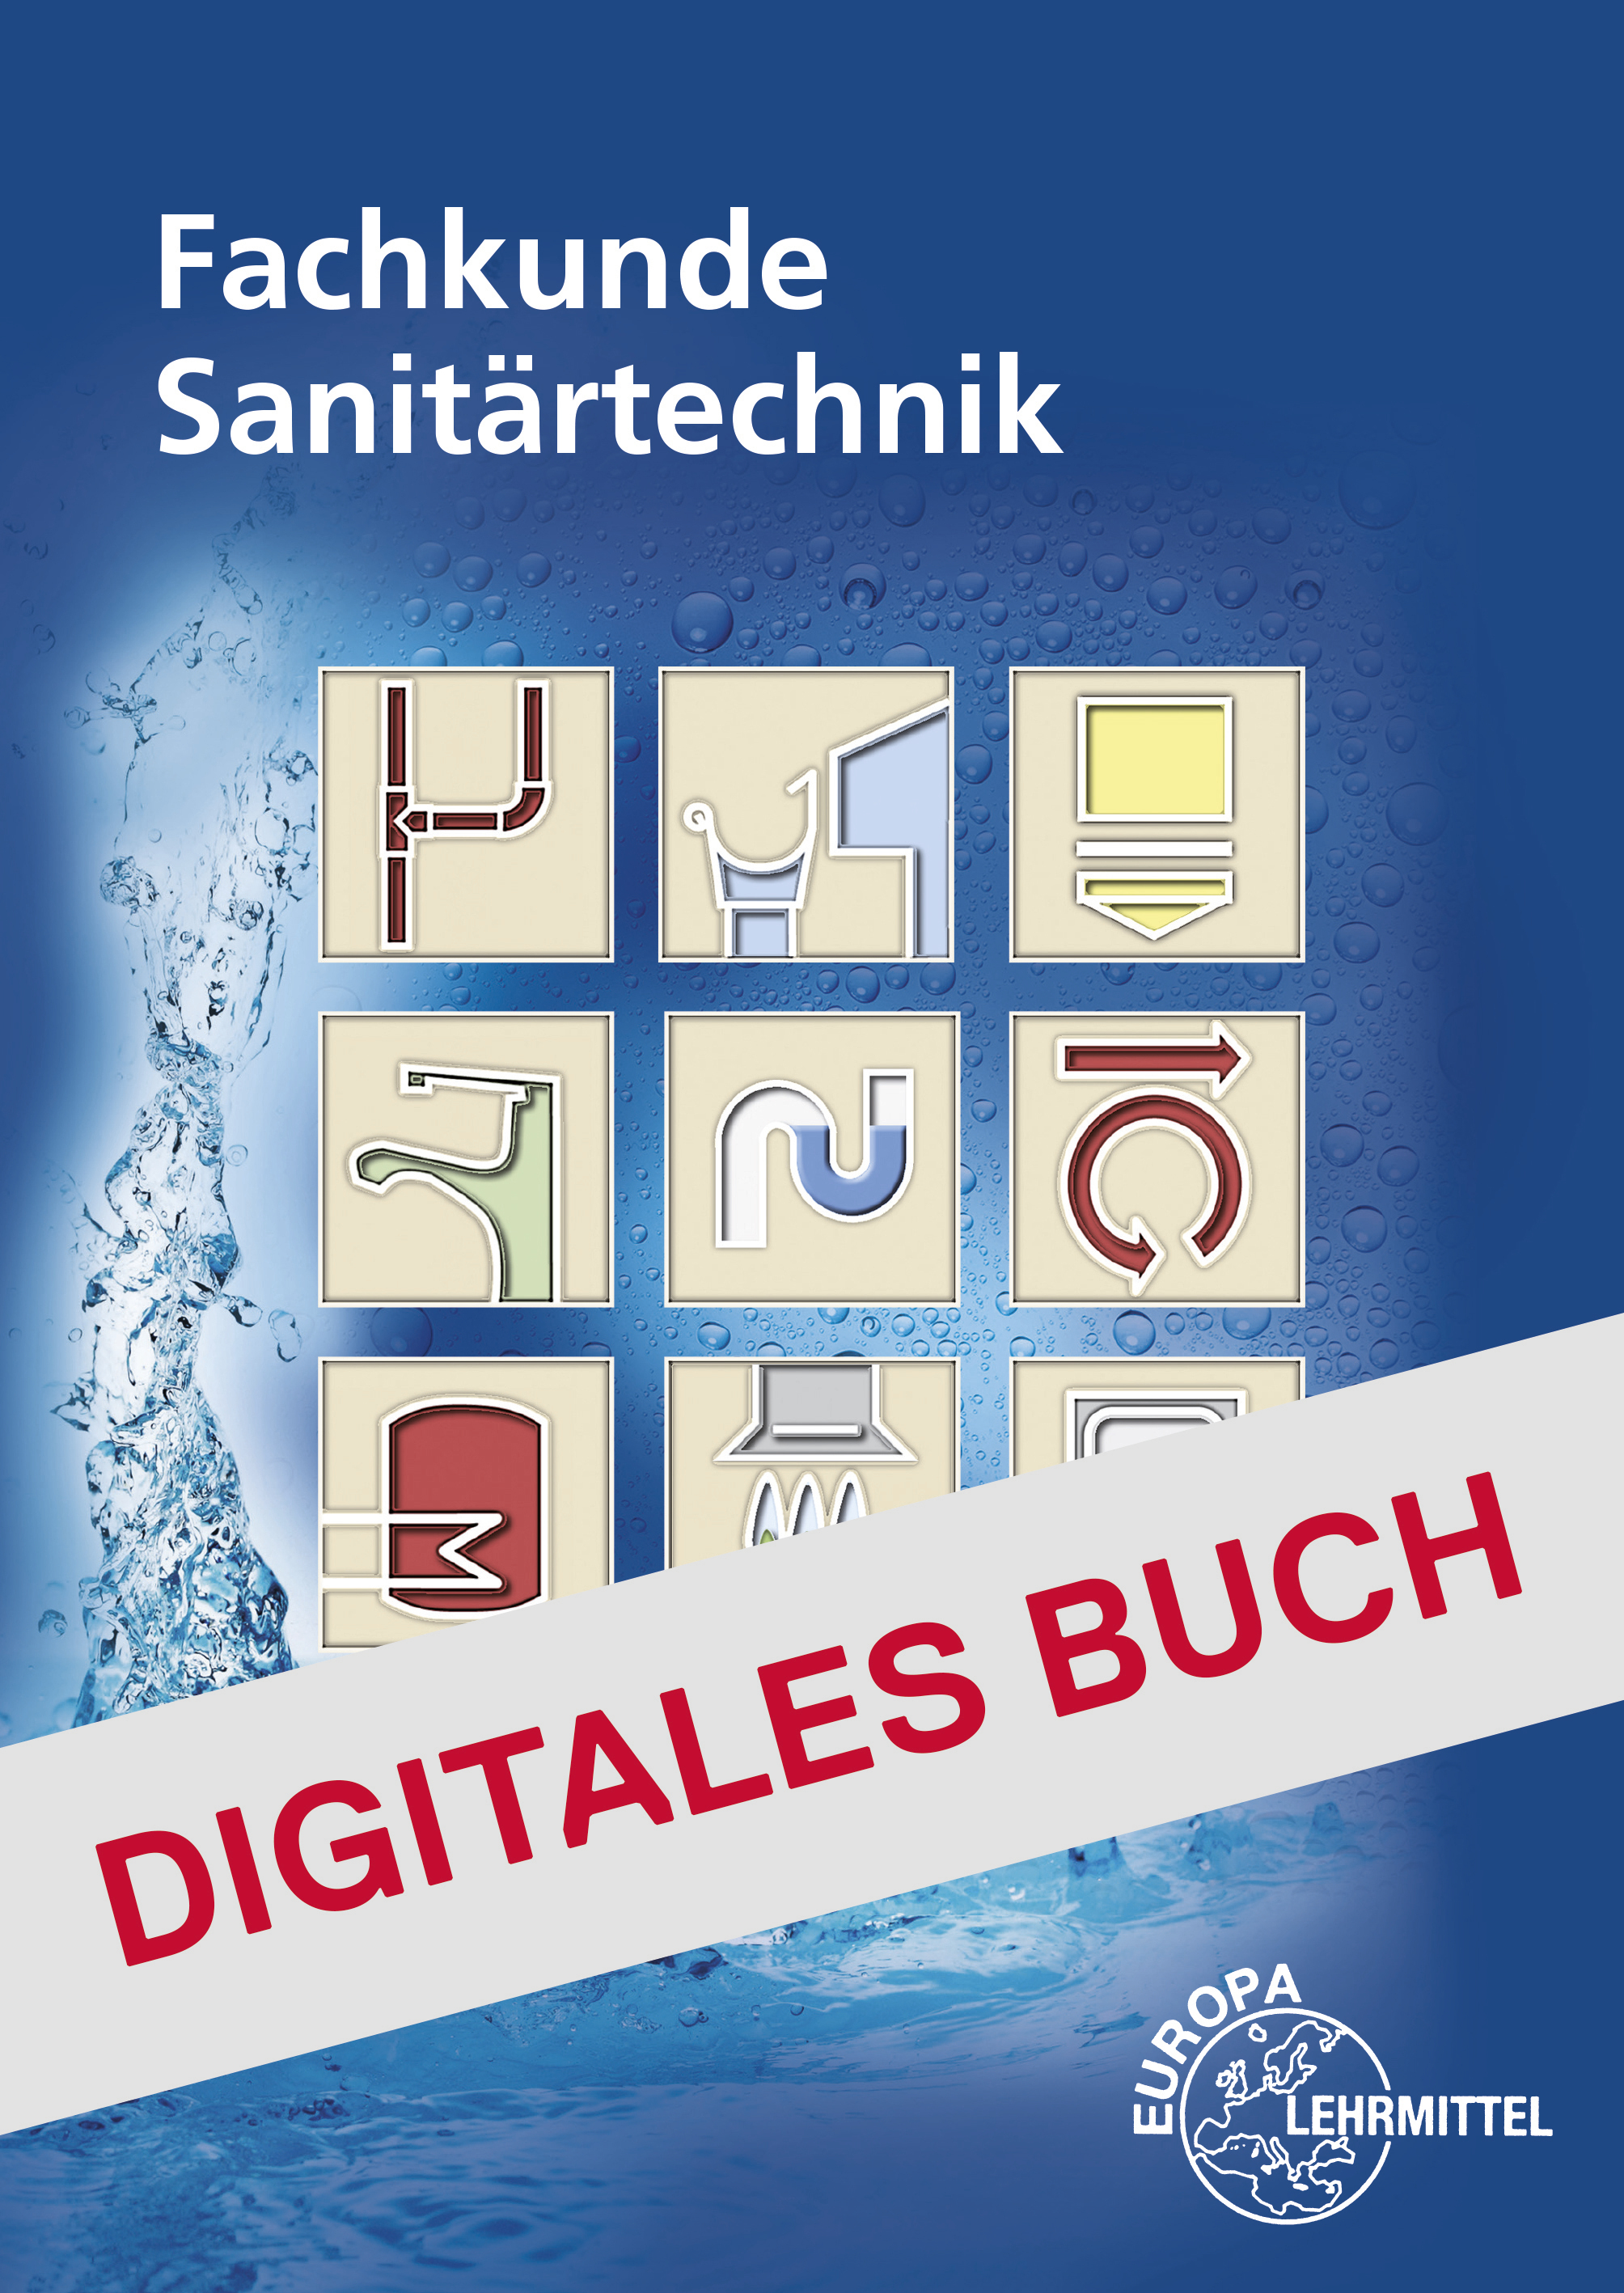 Fachkunde Sanitärtechnik - Digitales Buch